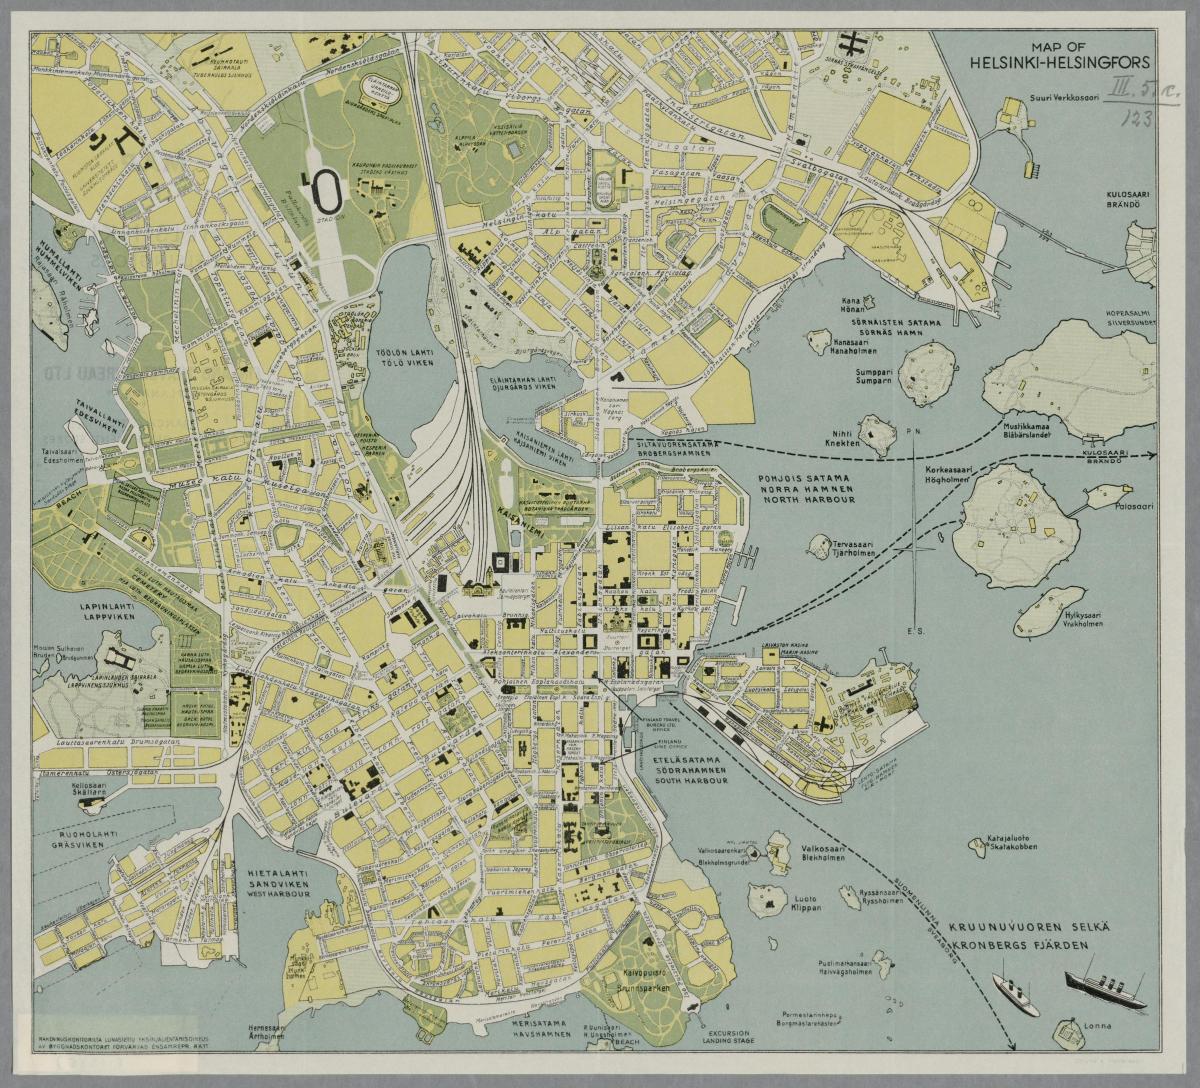 Helsinki historical map